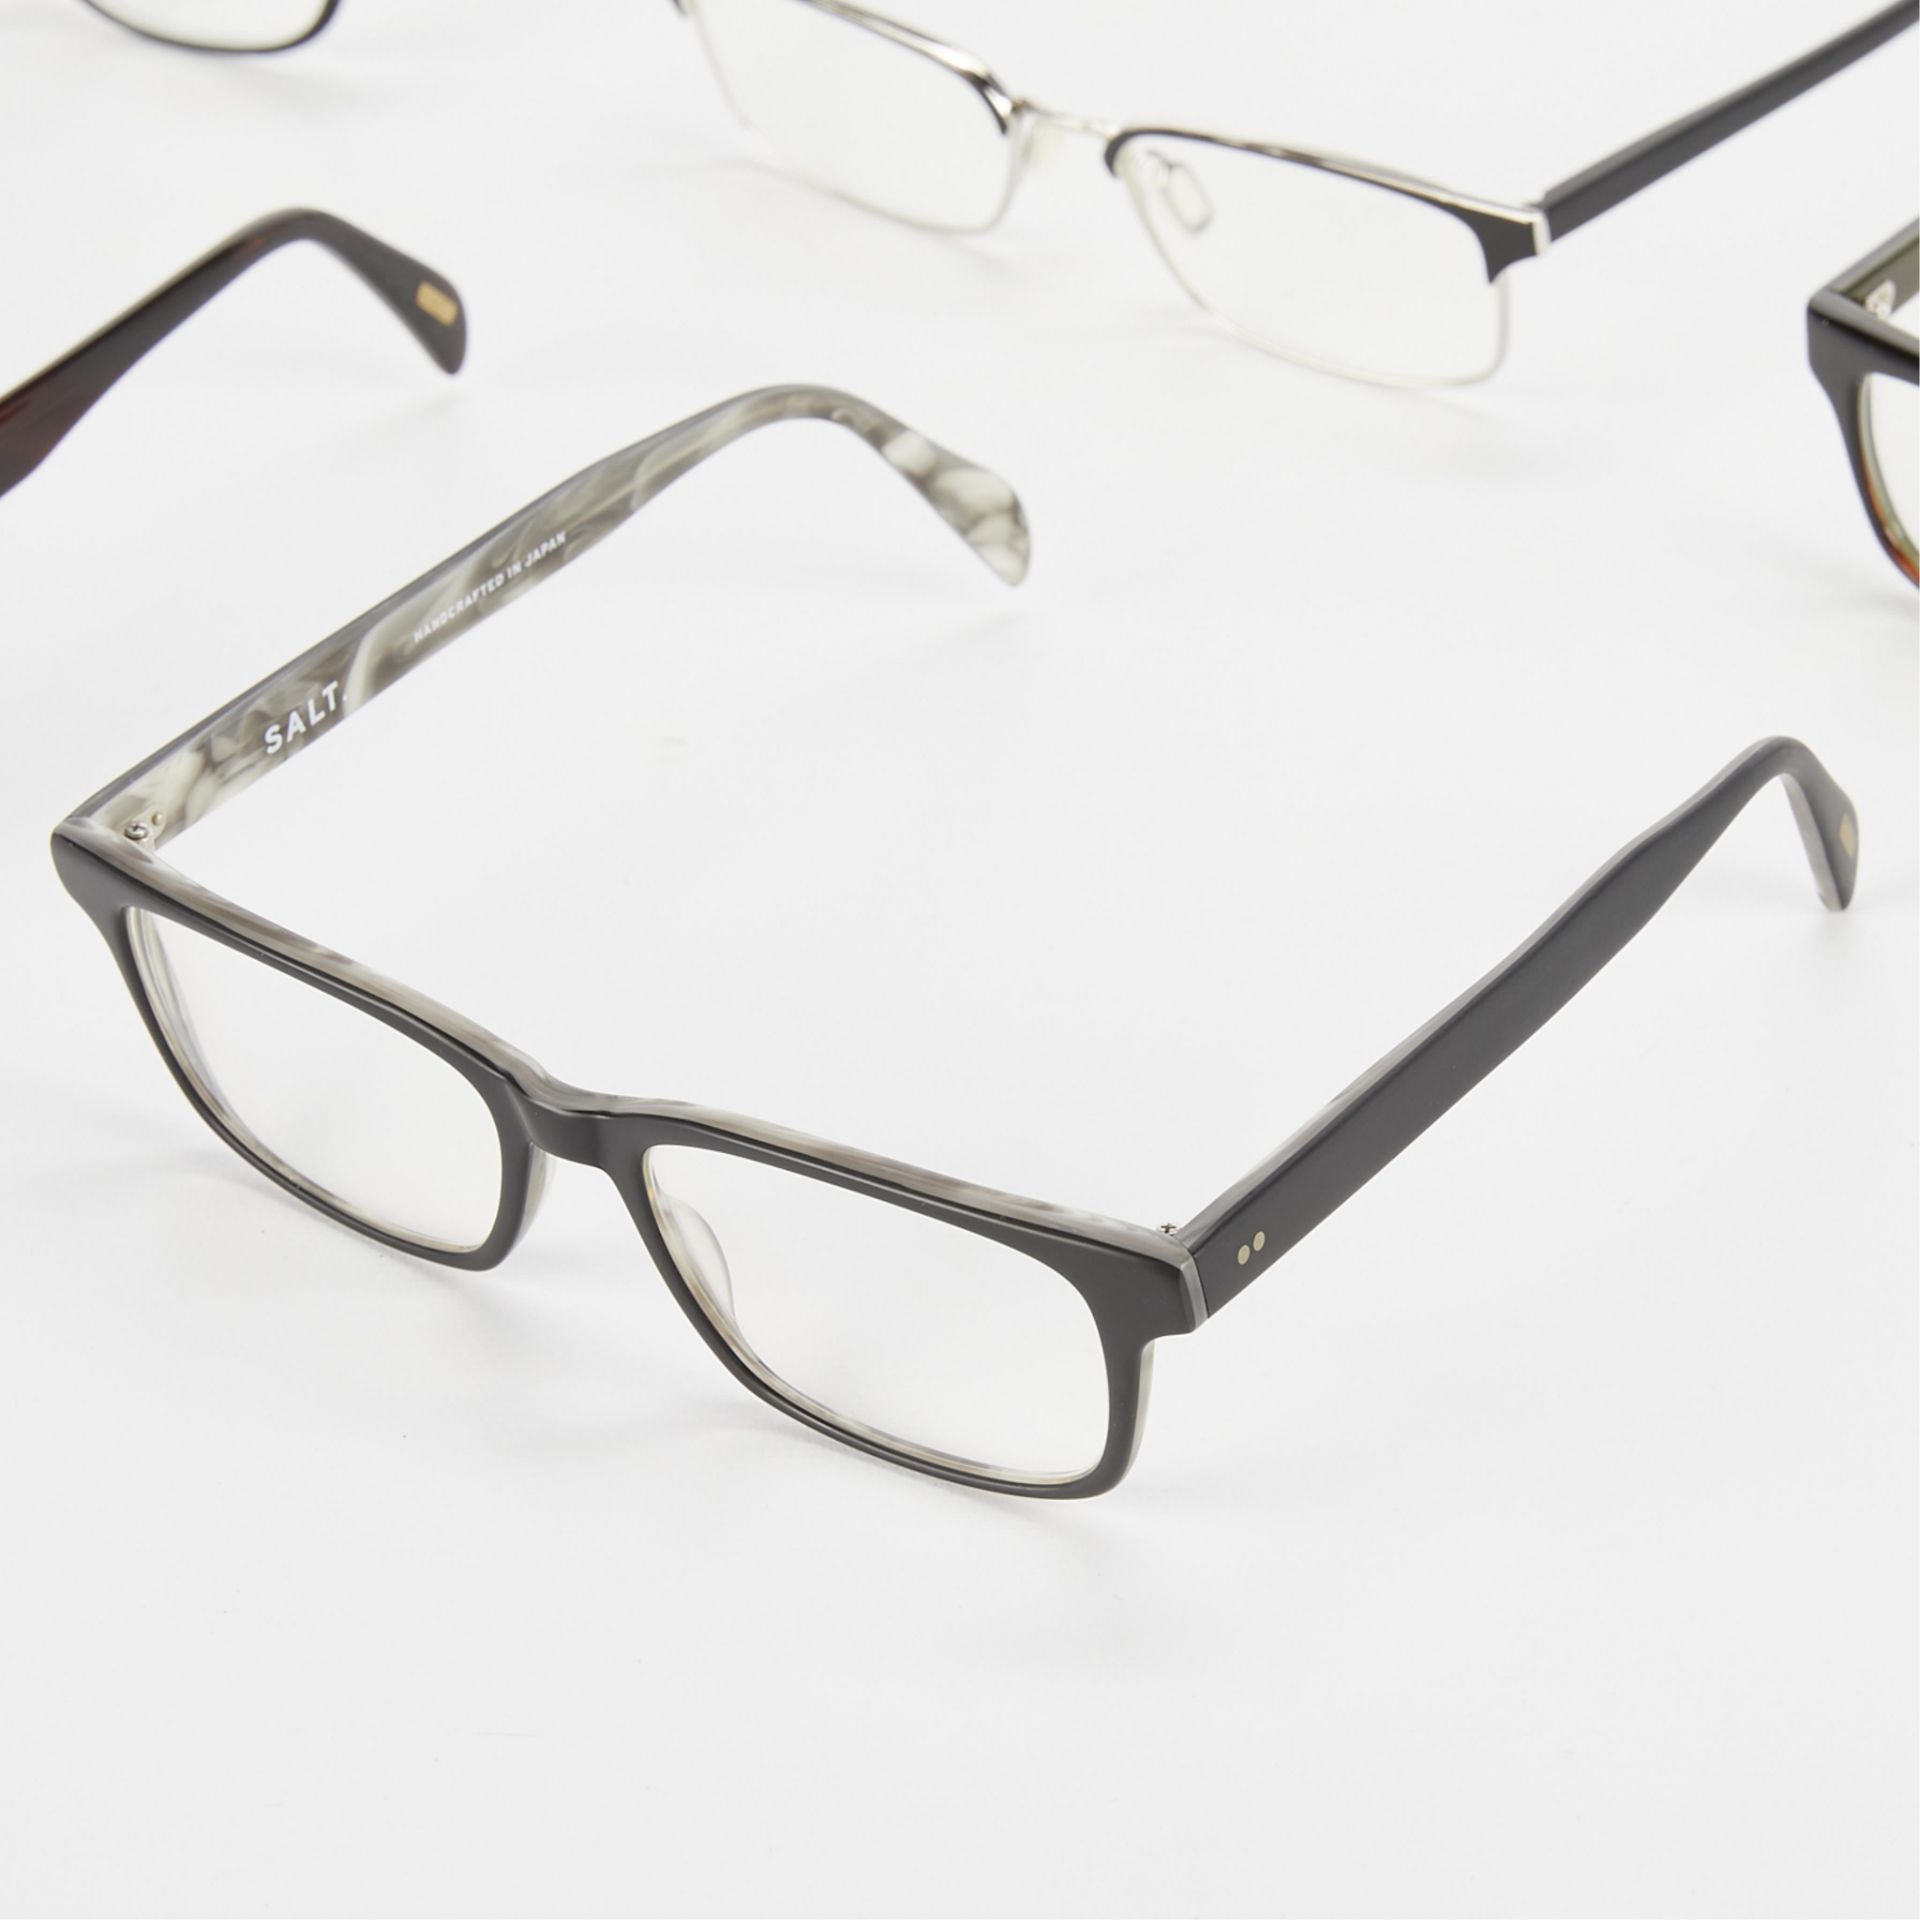 Grp of 8 SALT Eyeglasses - Image 5 of 11